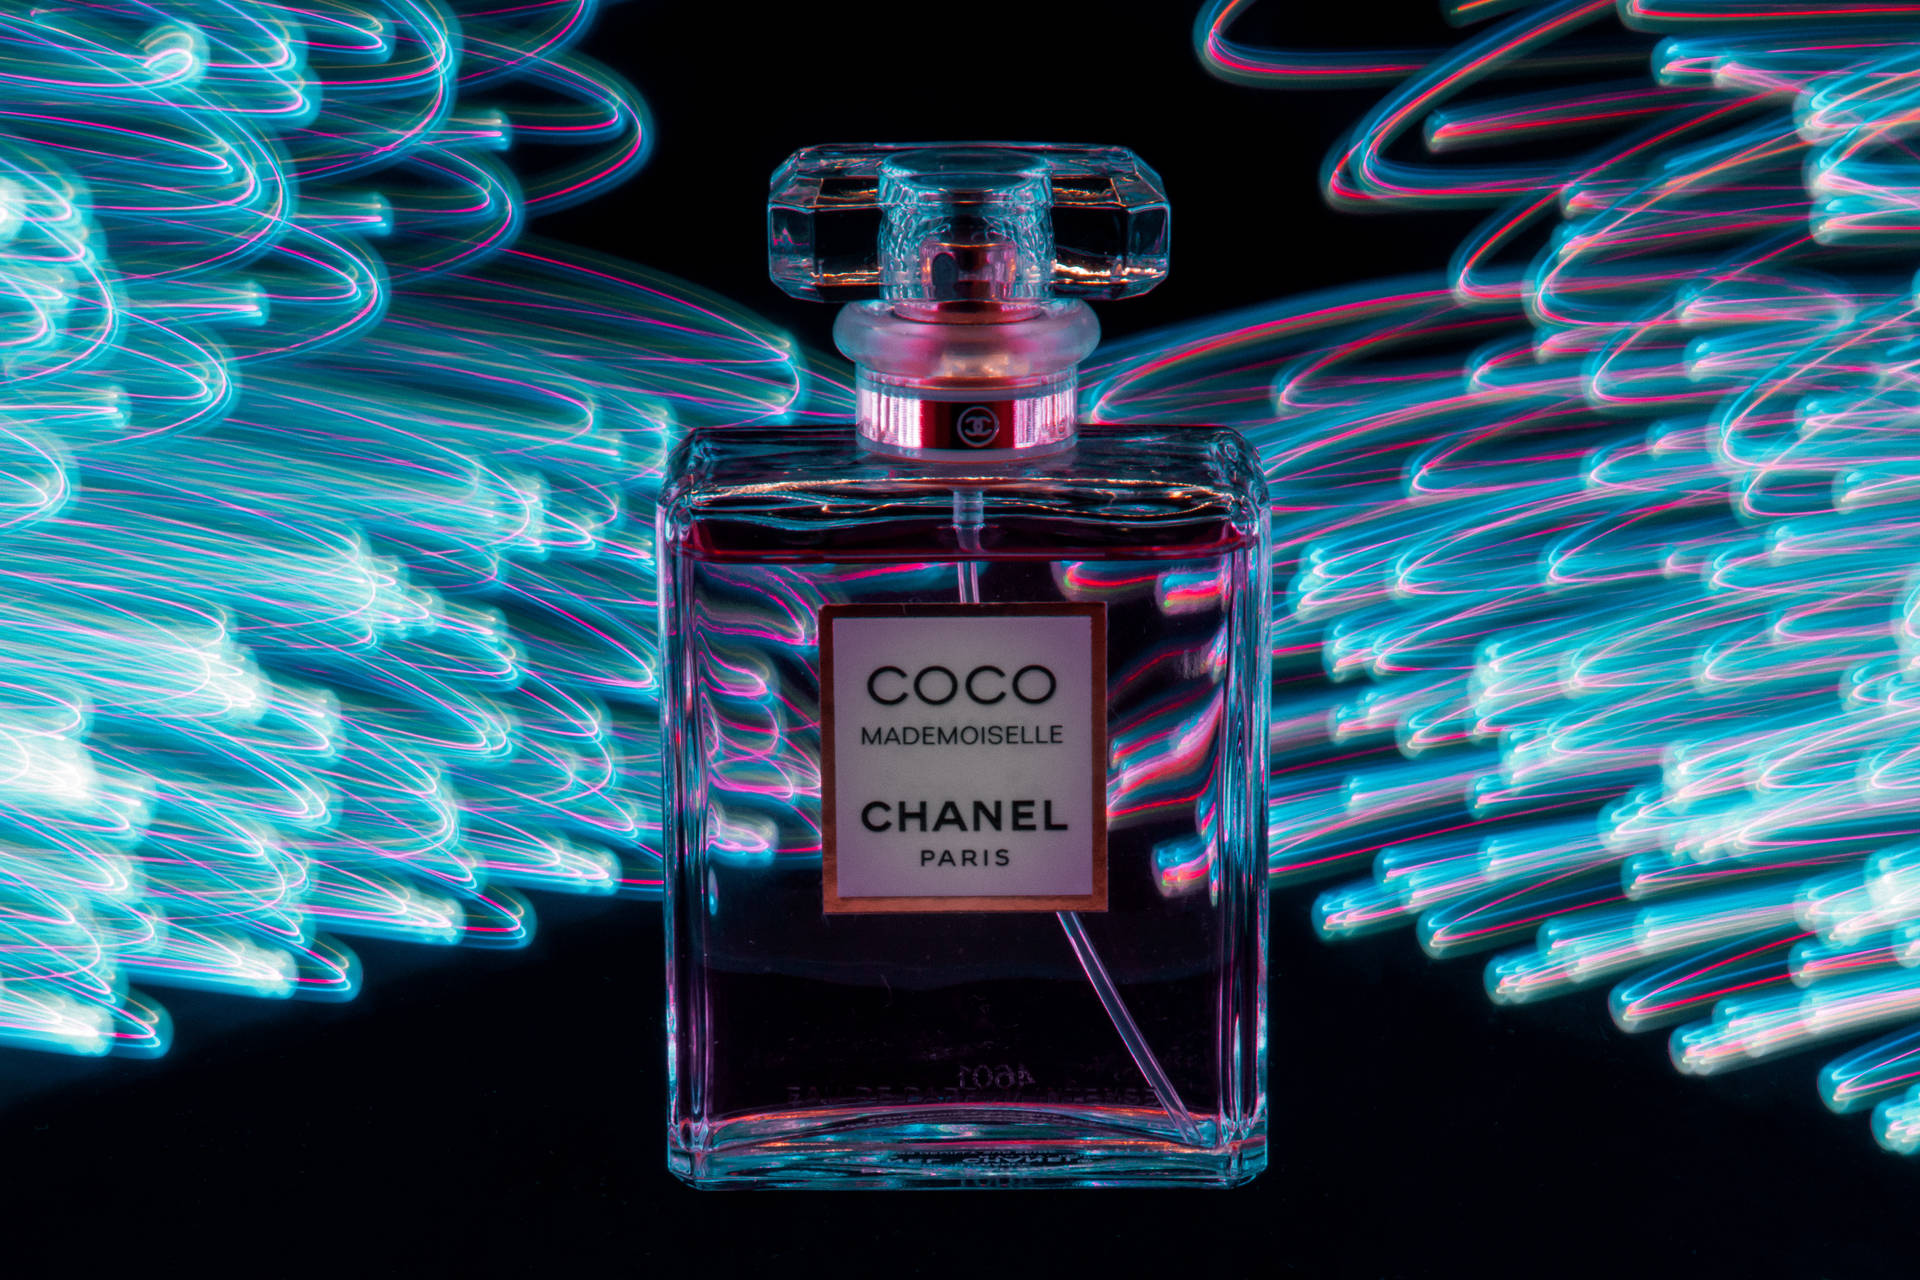 Chanel Coco Mademoiselle Neon Art Background